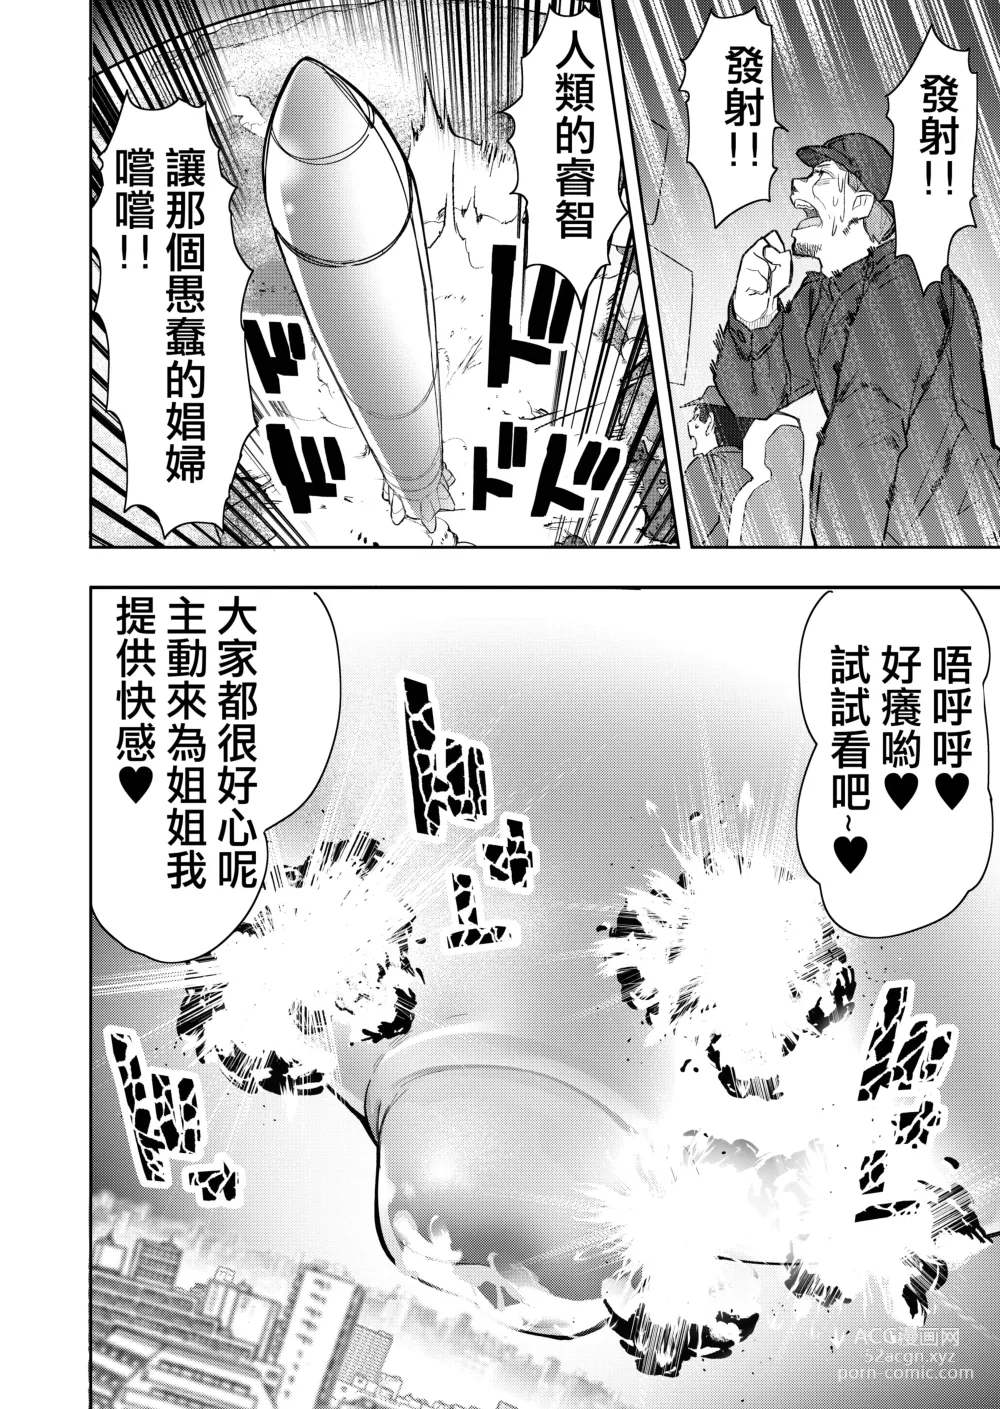 Page 52 of doujinshi 理解巨大化的她們